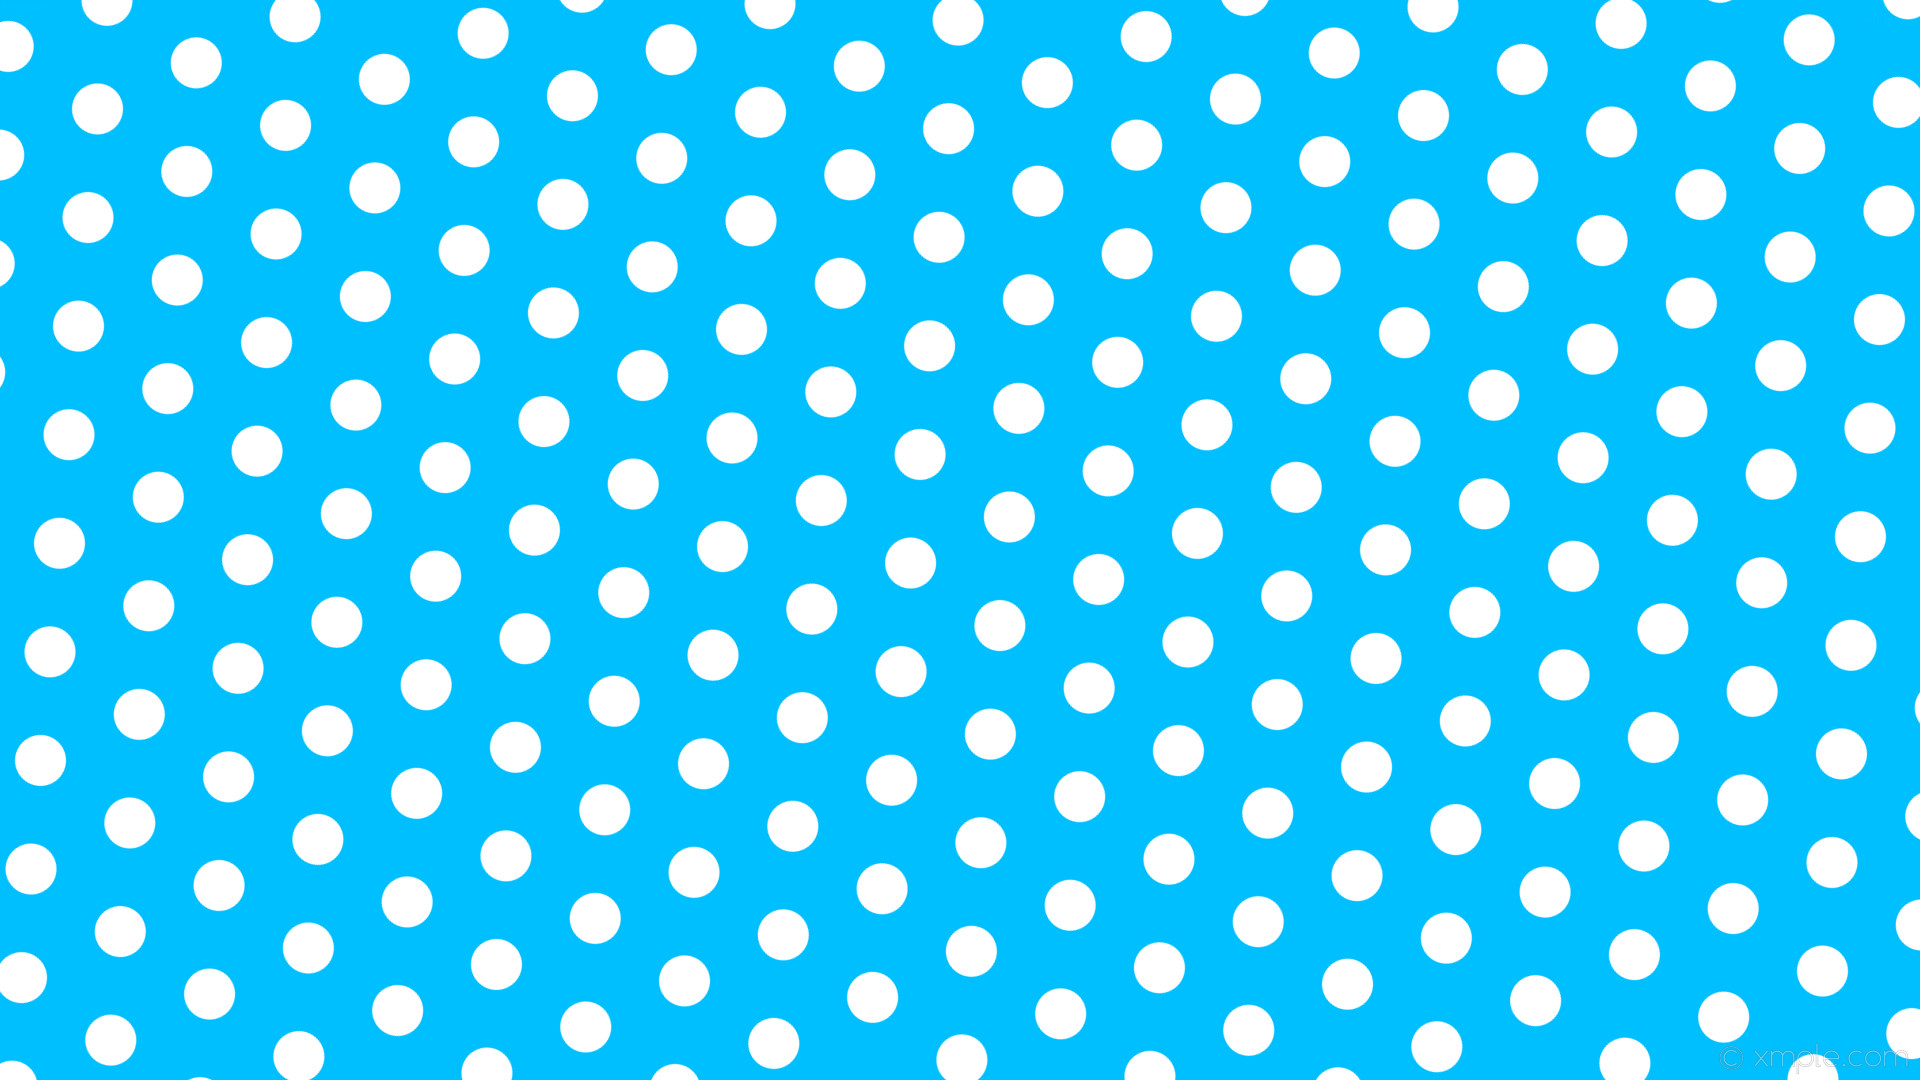 1920x1080 wallpaper dots blue hexagon white polka deep sky blue #00bfff #ffffff  diagonal 25Â°